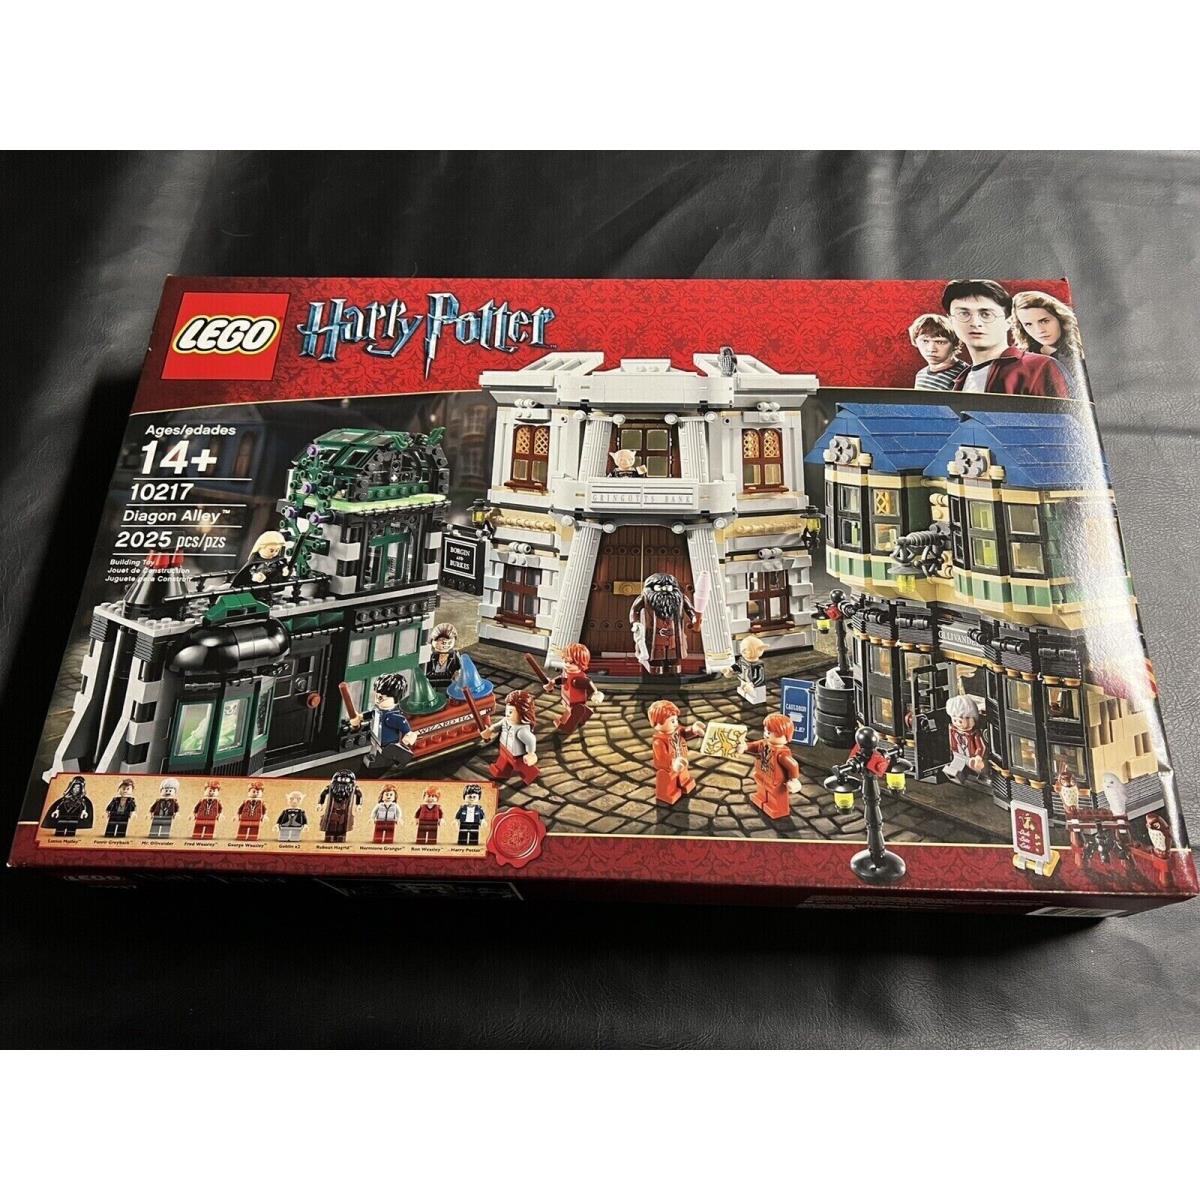 Lego Harry Potter Diagon Alley 10217 Set